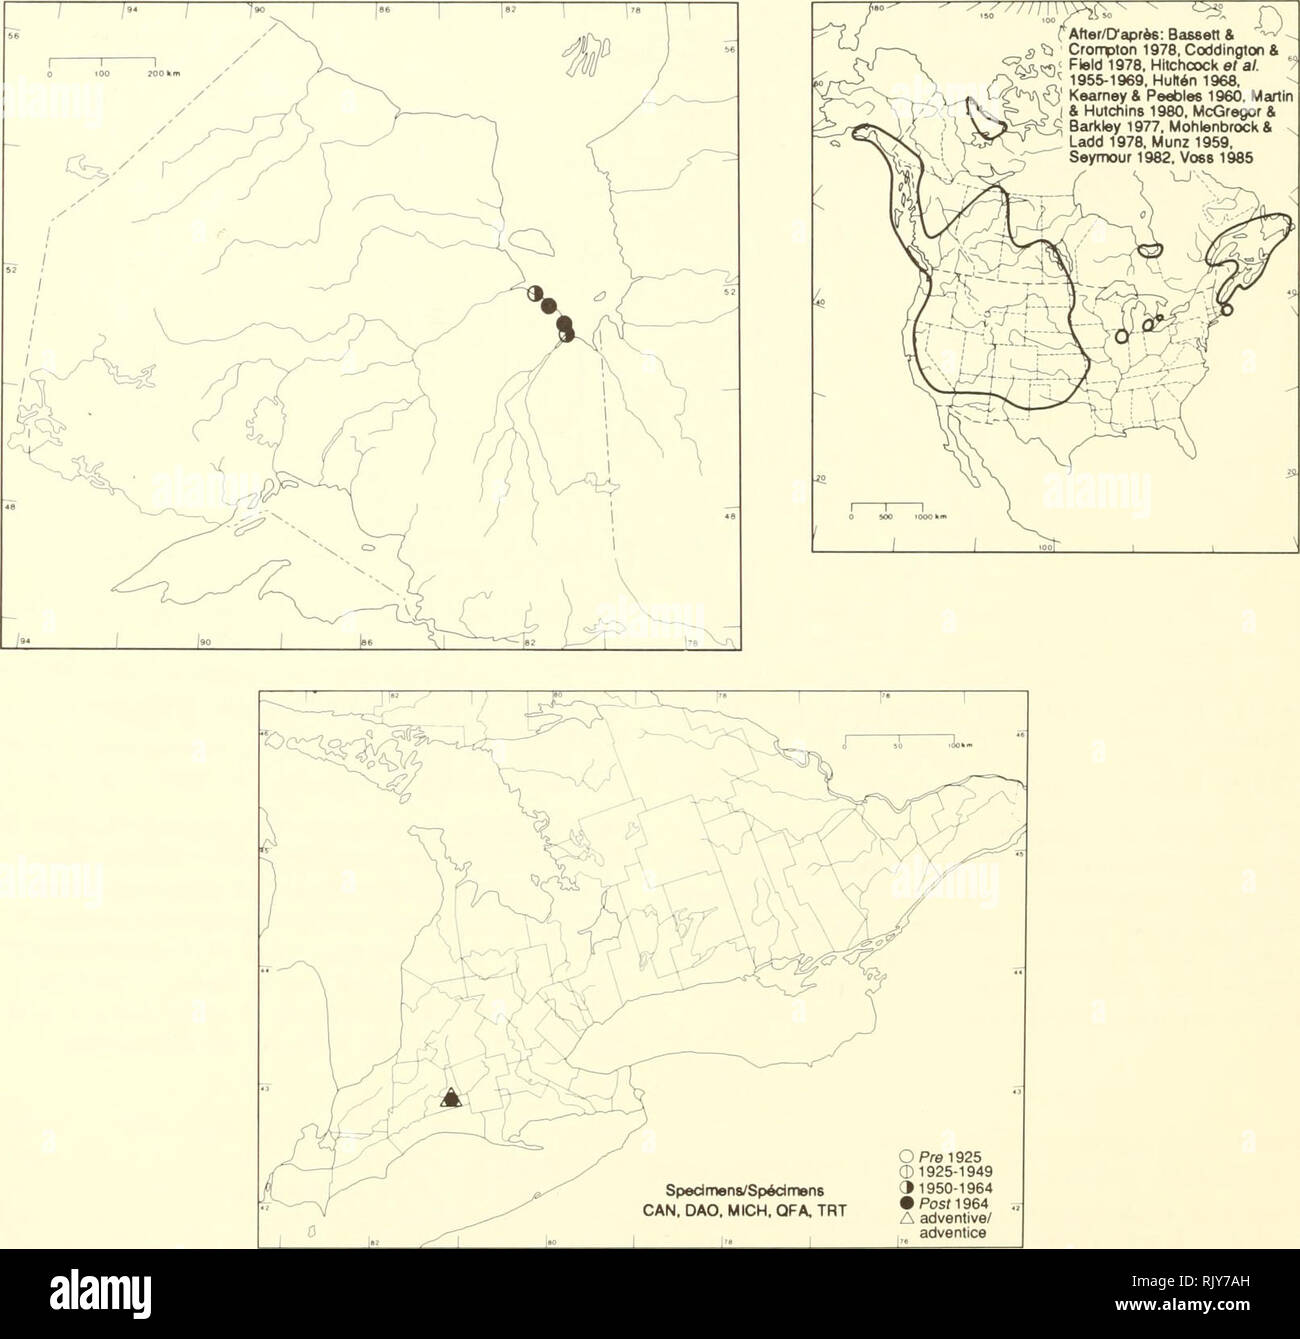 . Atlas of the rare vascular plants of Ontario. Rare plants; Botany. Atlas of the Rare Vascular Plants of Ontario/Atlas des plantes vasculaires rares de l'Ontario CHENOPODIACEAE Suaeda calceoliformis (Hook.) Moq. (S. americana {Pers.) Fern., S. depressa aucn. non (Pursh) S. Wats., S. depressa war. erecta S. Wats) Sea-blite SuÃ©da. HABITAT: Saline and alkaline areas. STATUS: Rare in the Northwest Territories, Prince Edward Island, and the Yukon. Rare in Maine and Massachusetts. HABITAT: Zones salines et alcalines. SITUATION: Rare dans les Territoires du Nord- Ouest, Ã l'Ã®le du Prince-Edouard e Stock Photo